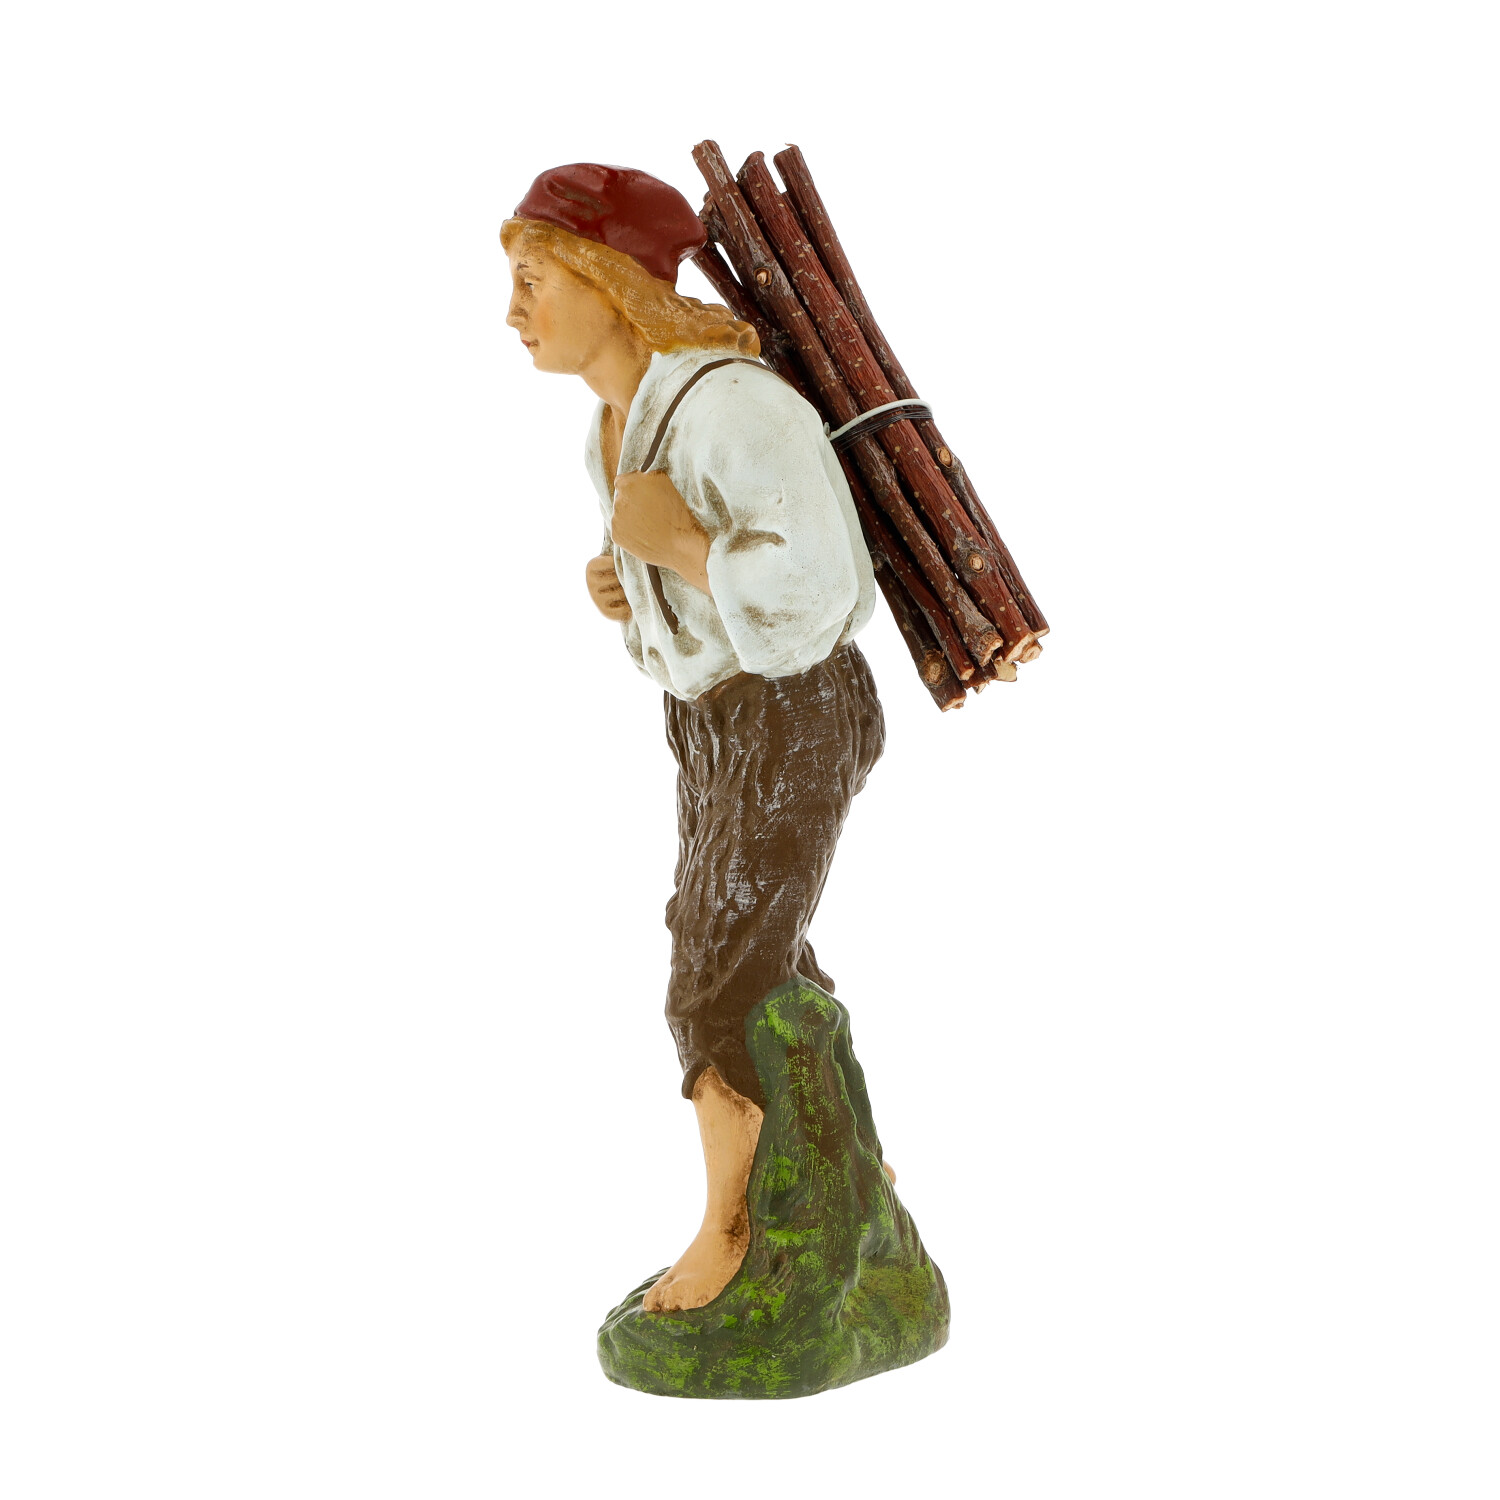 Shepherd with timber - Marolin Nativity figure - made in Germany